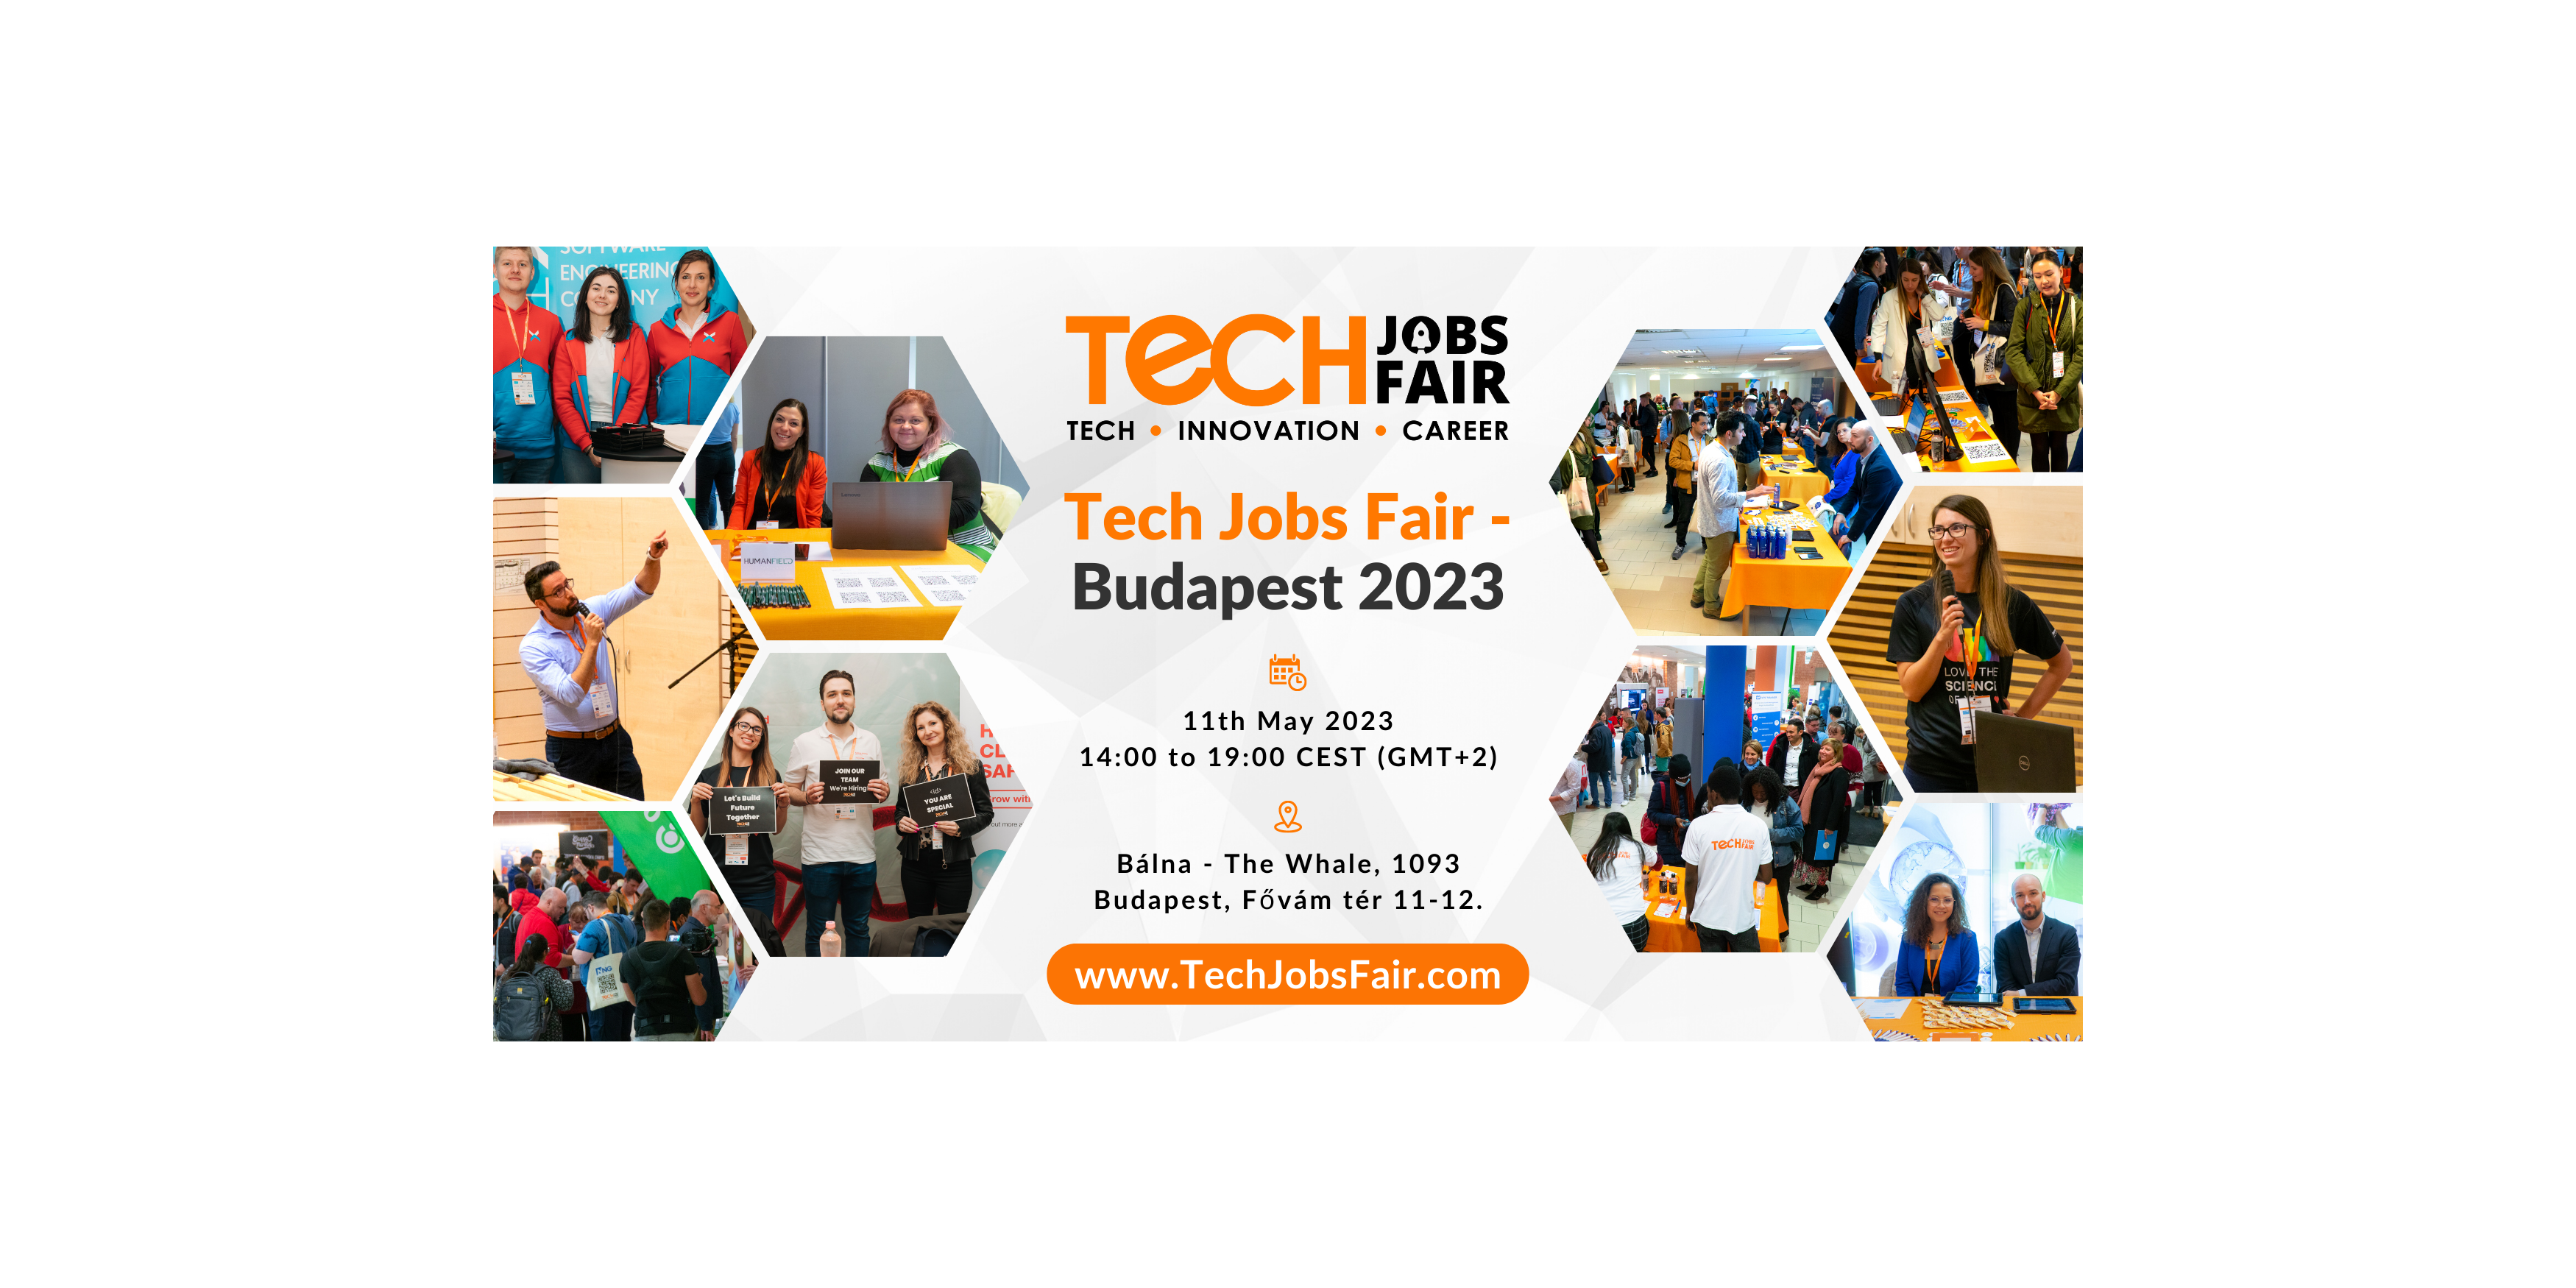 Europe’s #1 Tech Recruitment Event Returns to Budapest